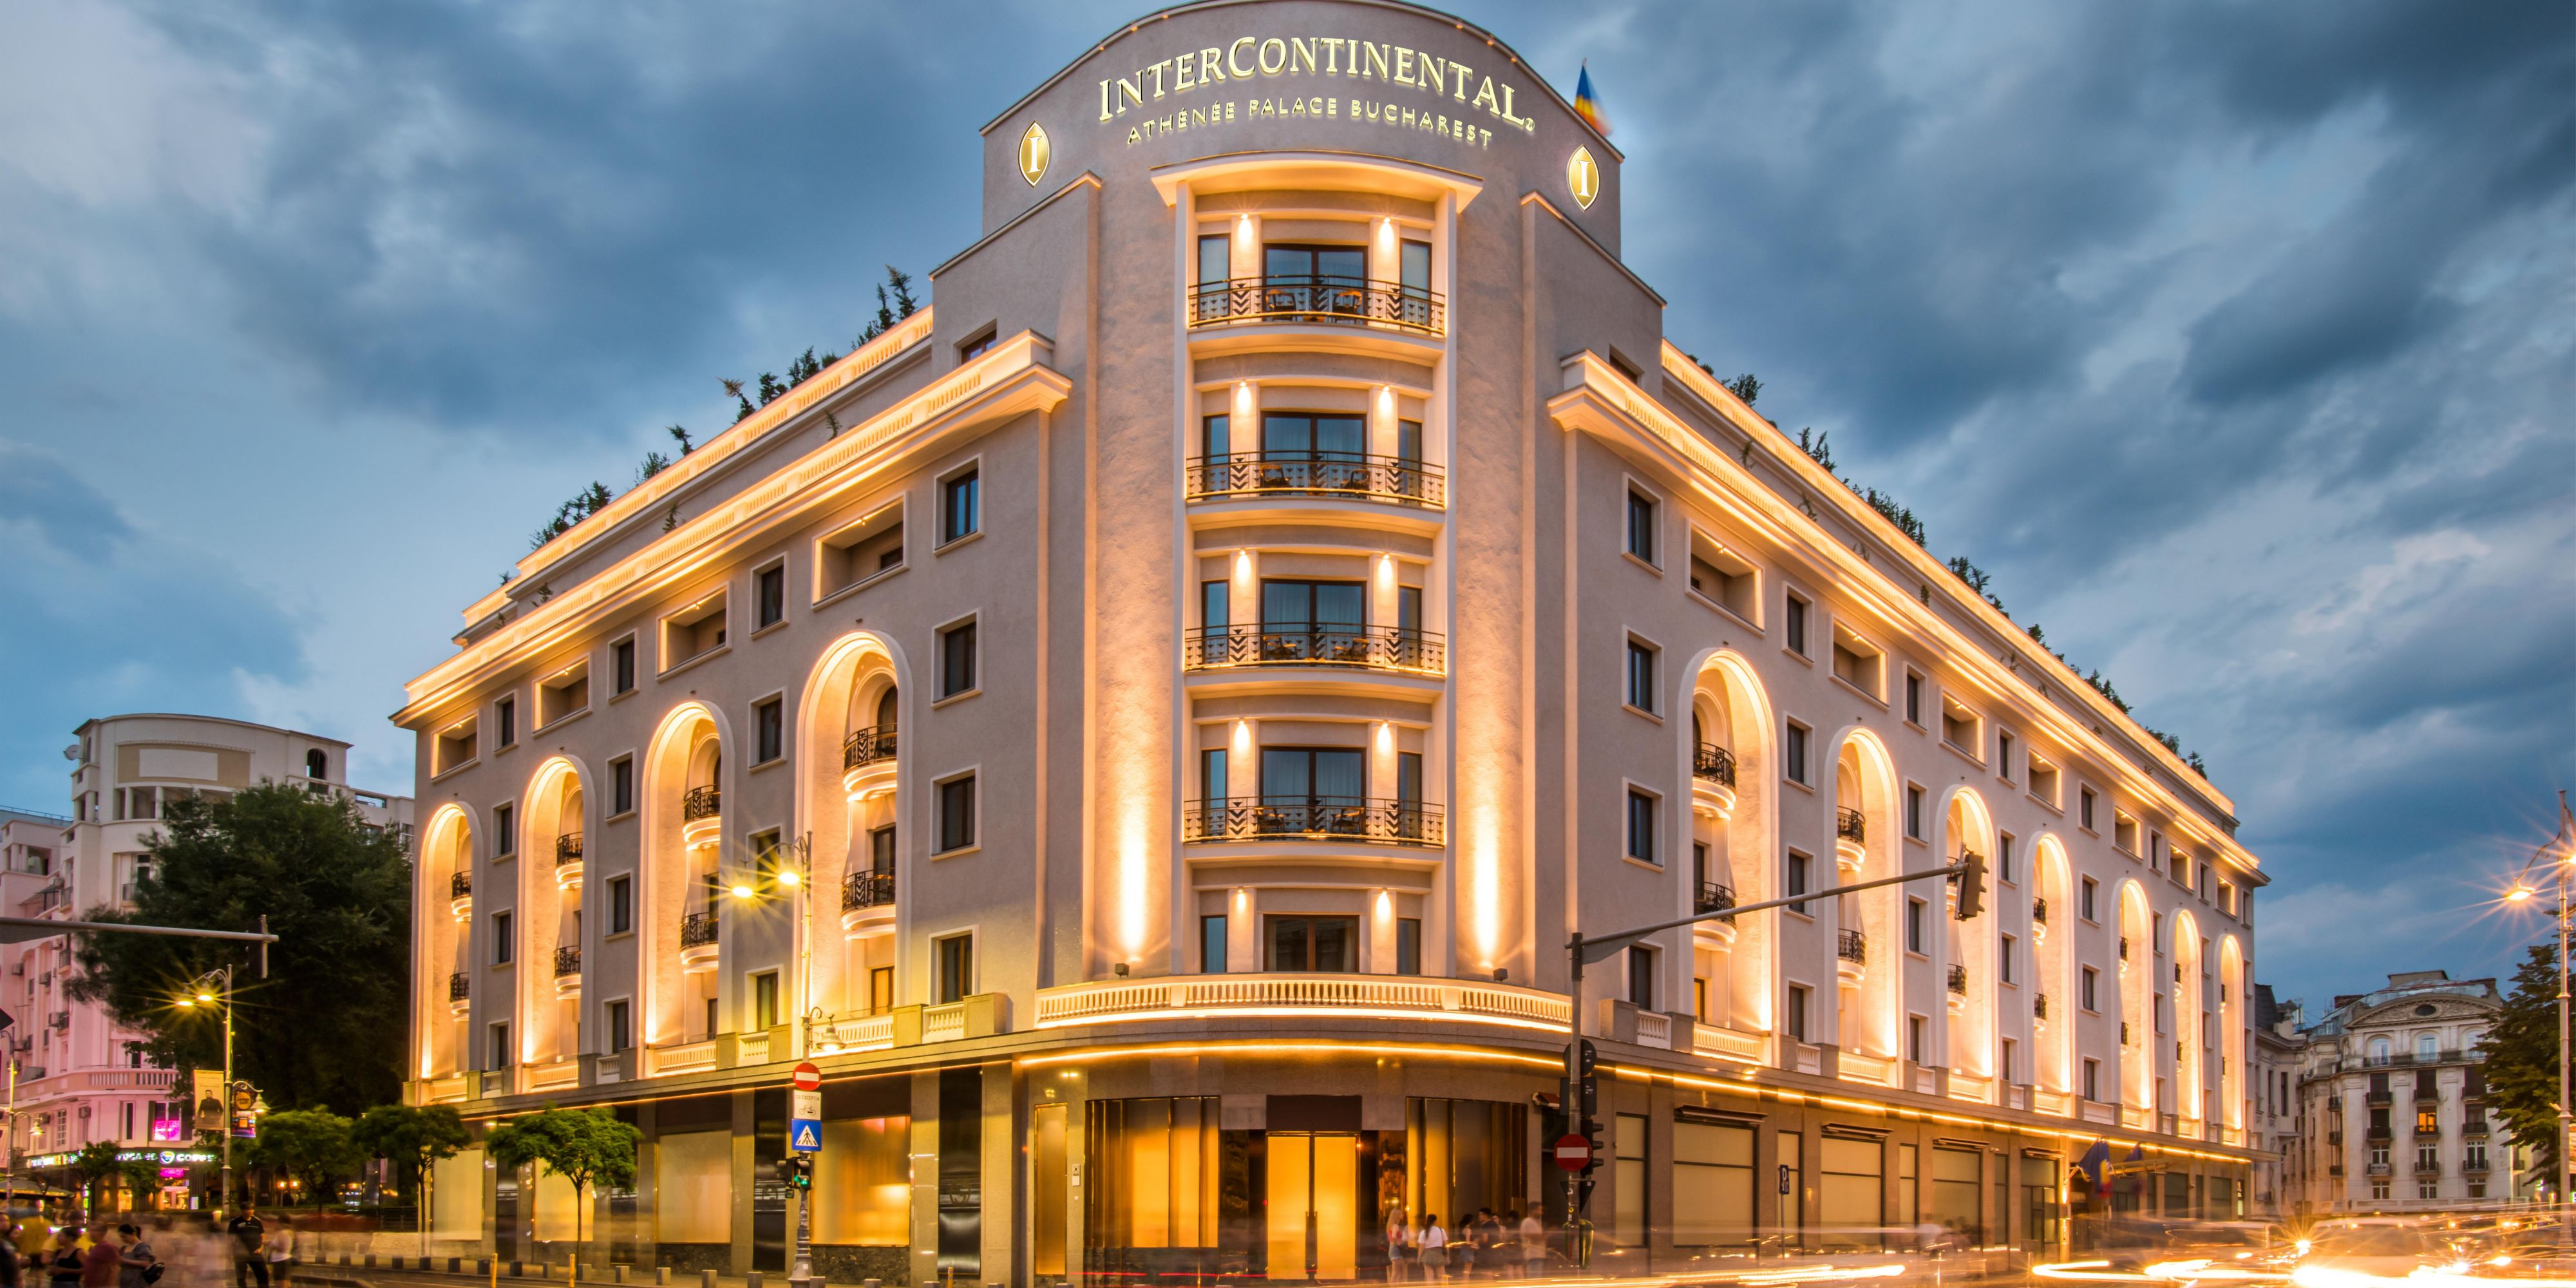 Intercontinental Bucharest 8005817124 2x1